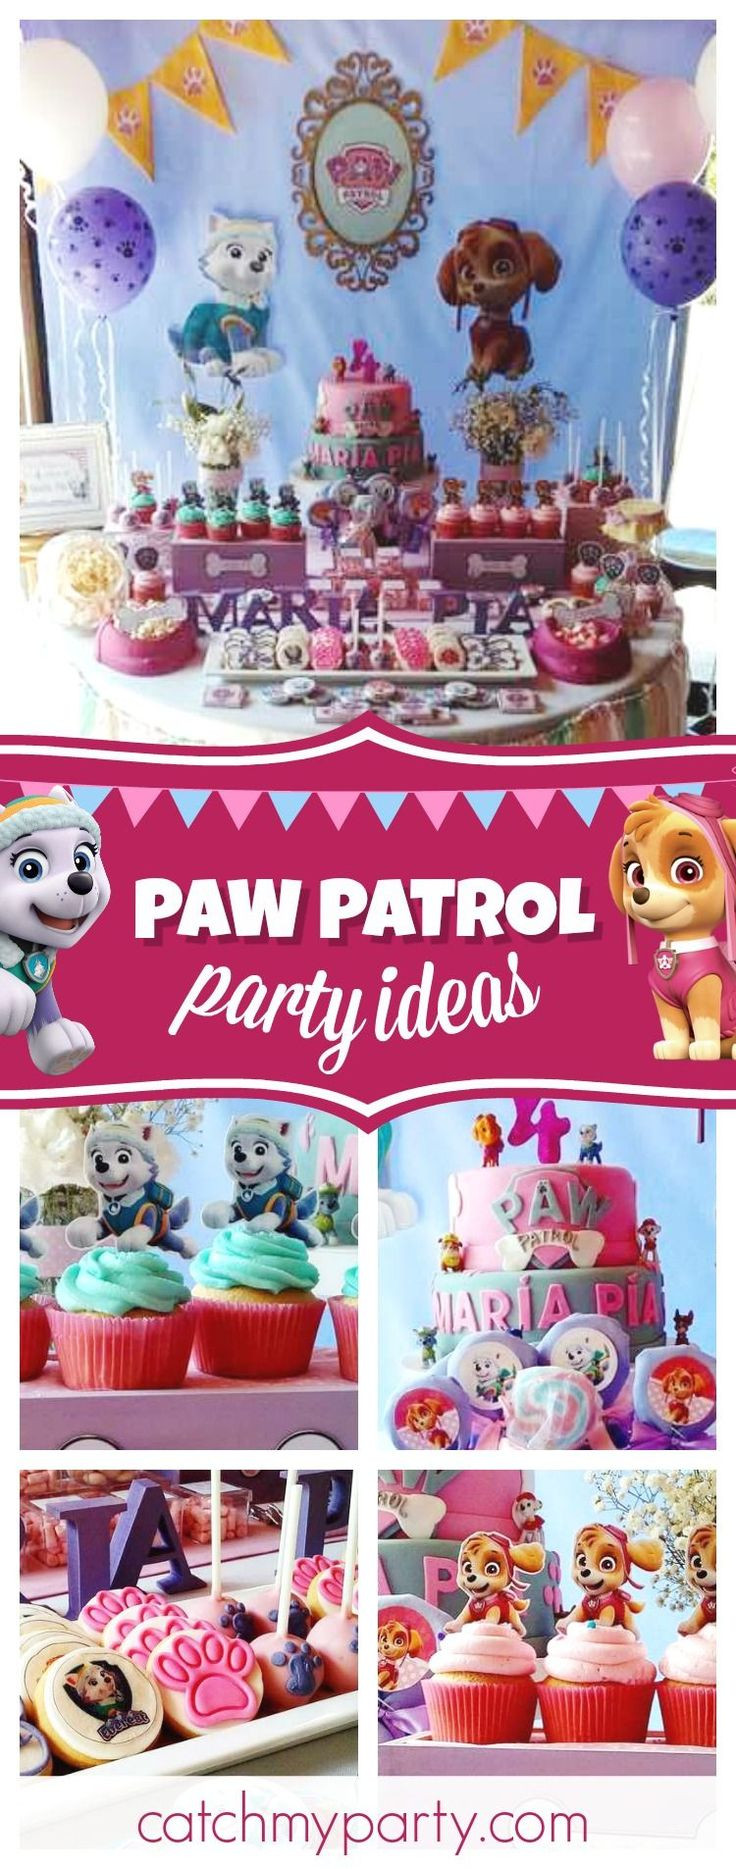 Best ideas about Paw Patrol Girl Birthday Party
. Save or Pin Best 25 Paw patrol party ideas on Pinterest Now.